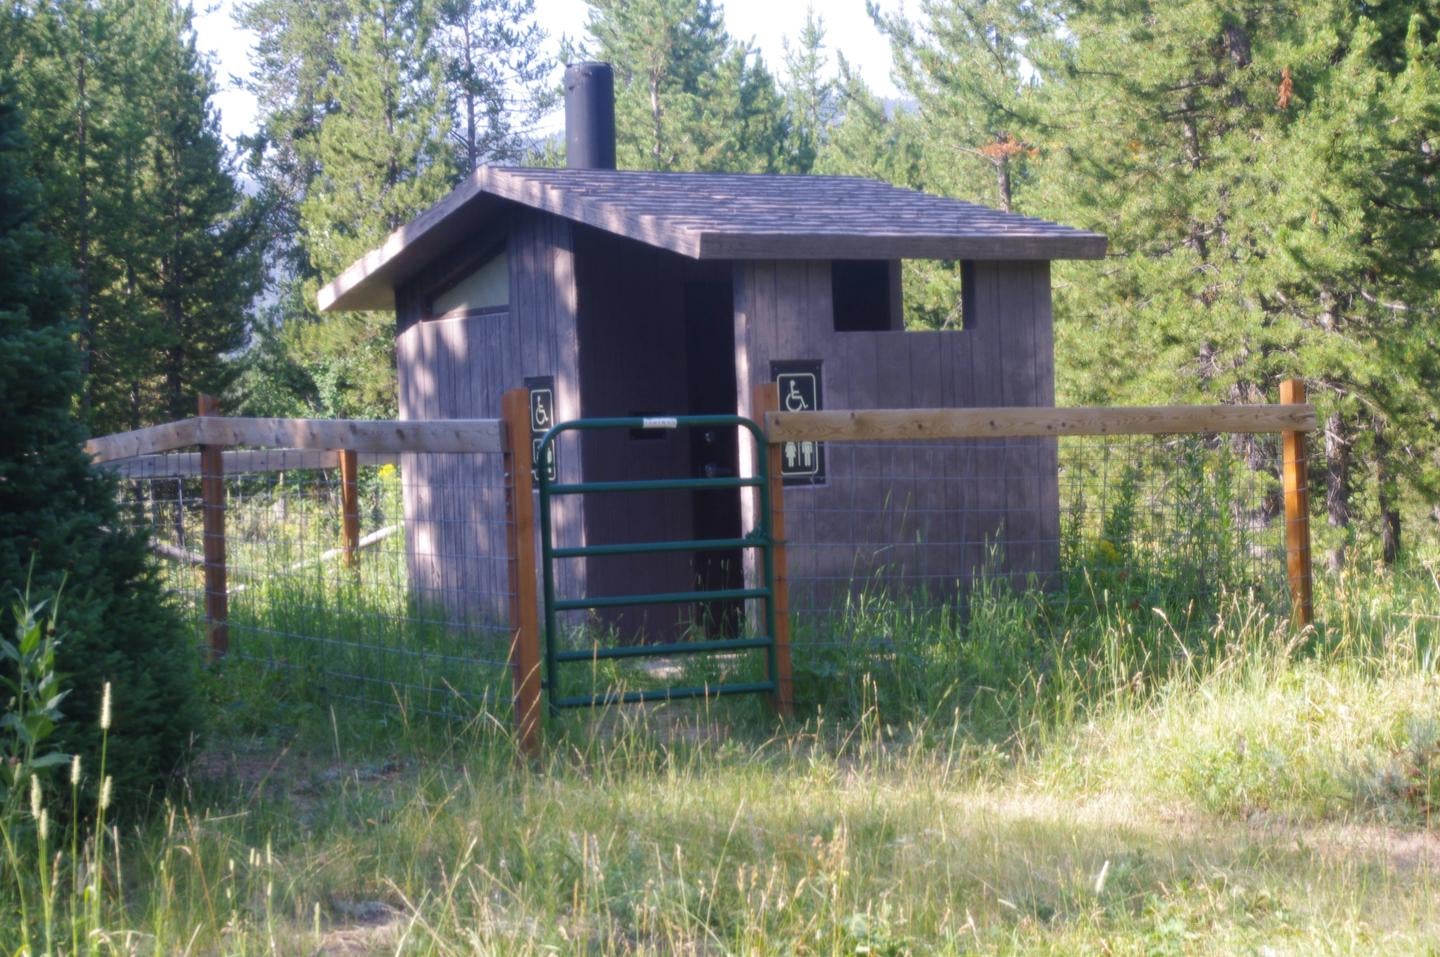 Diamond Creek Guard Station



Toilet

Credit: US Forest Service